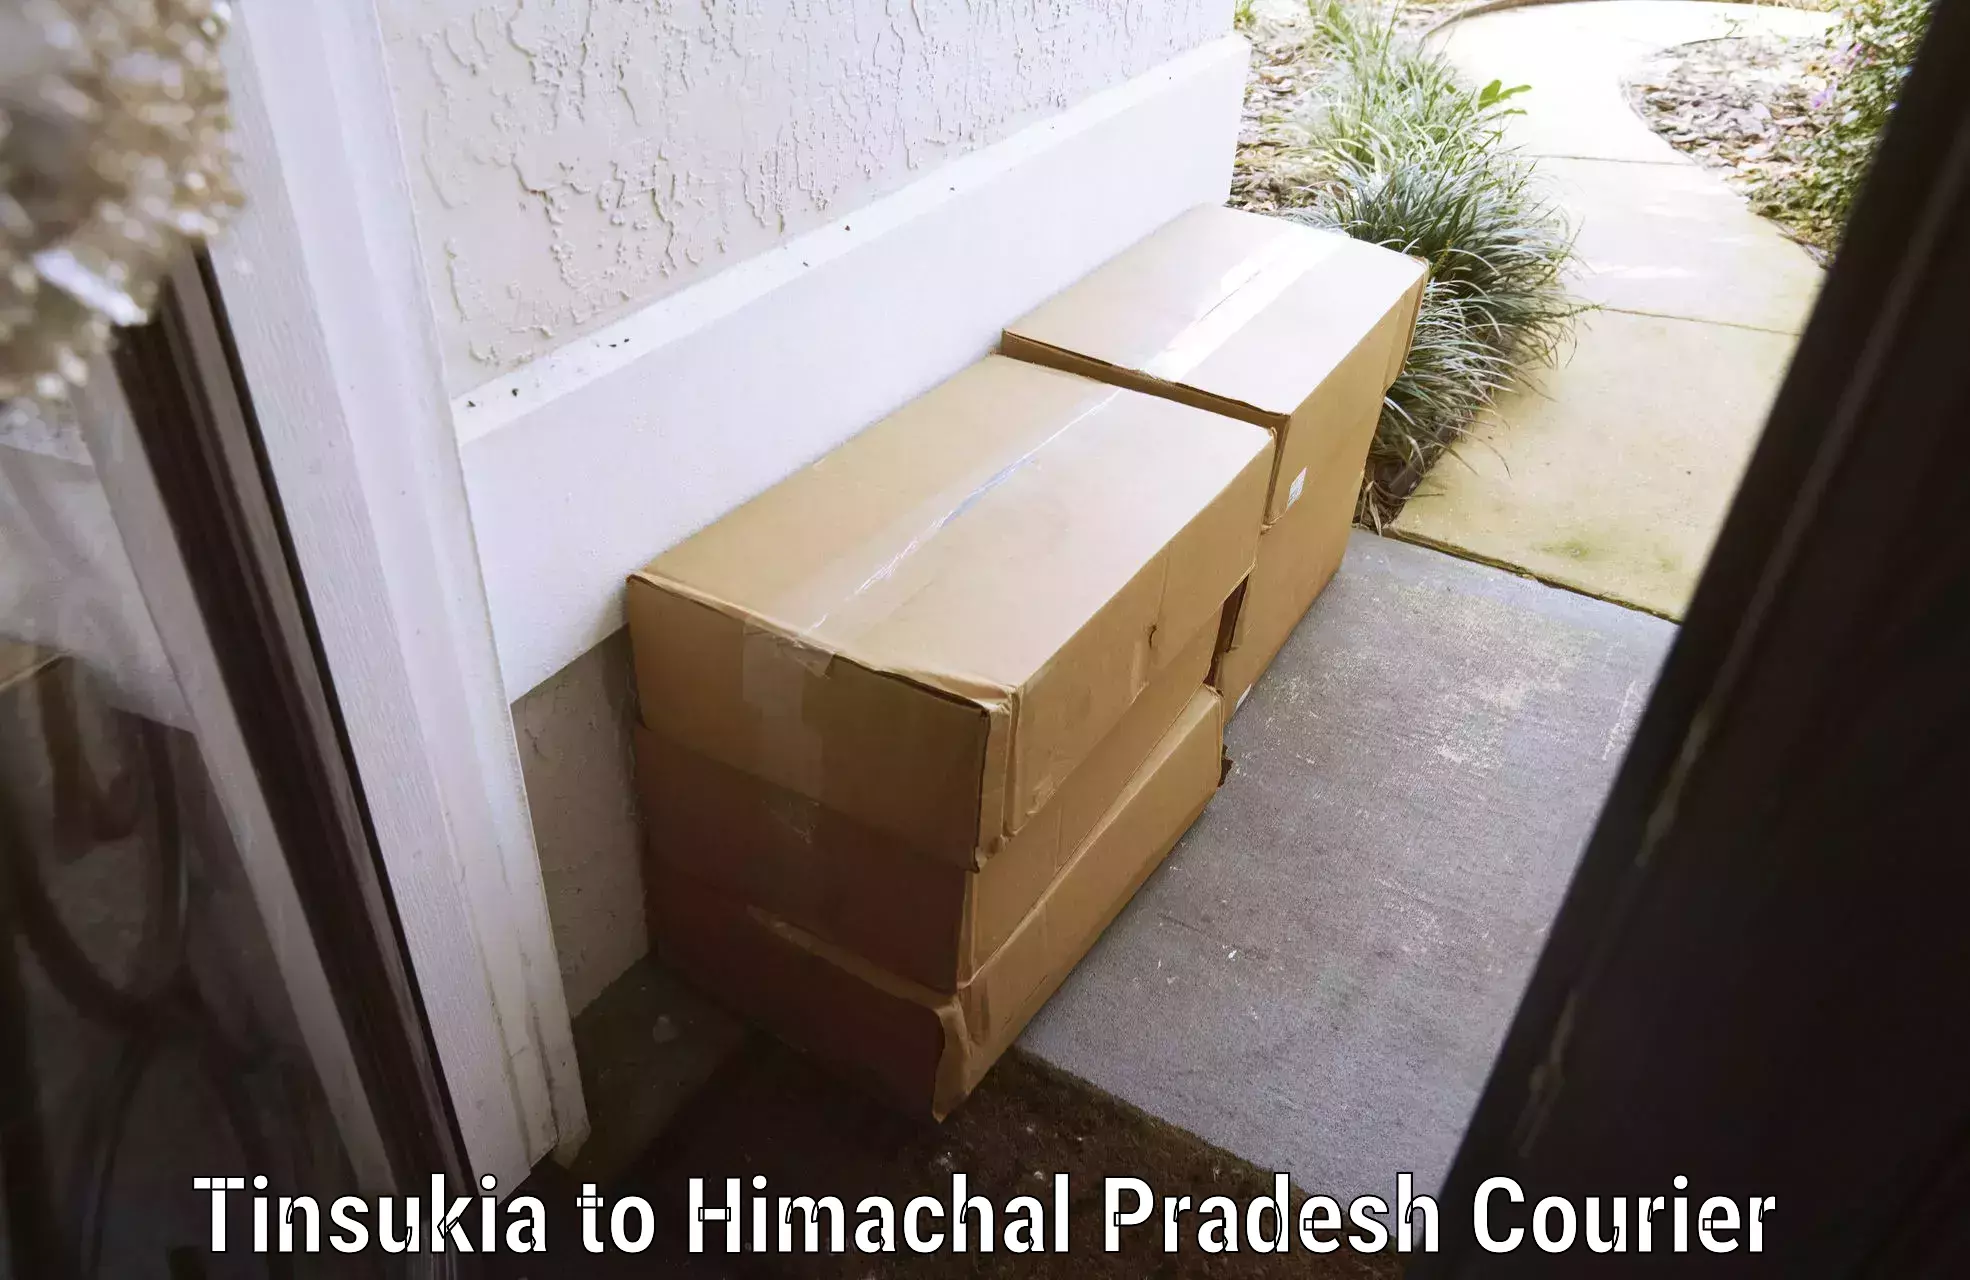 Baggage transport professionals Tinsukia to Himachal Pradesh